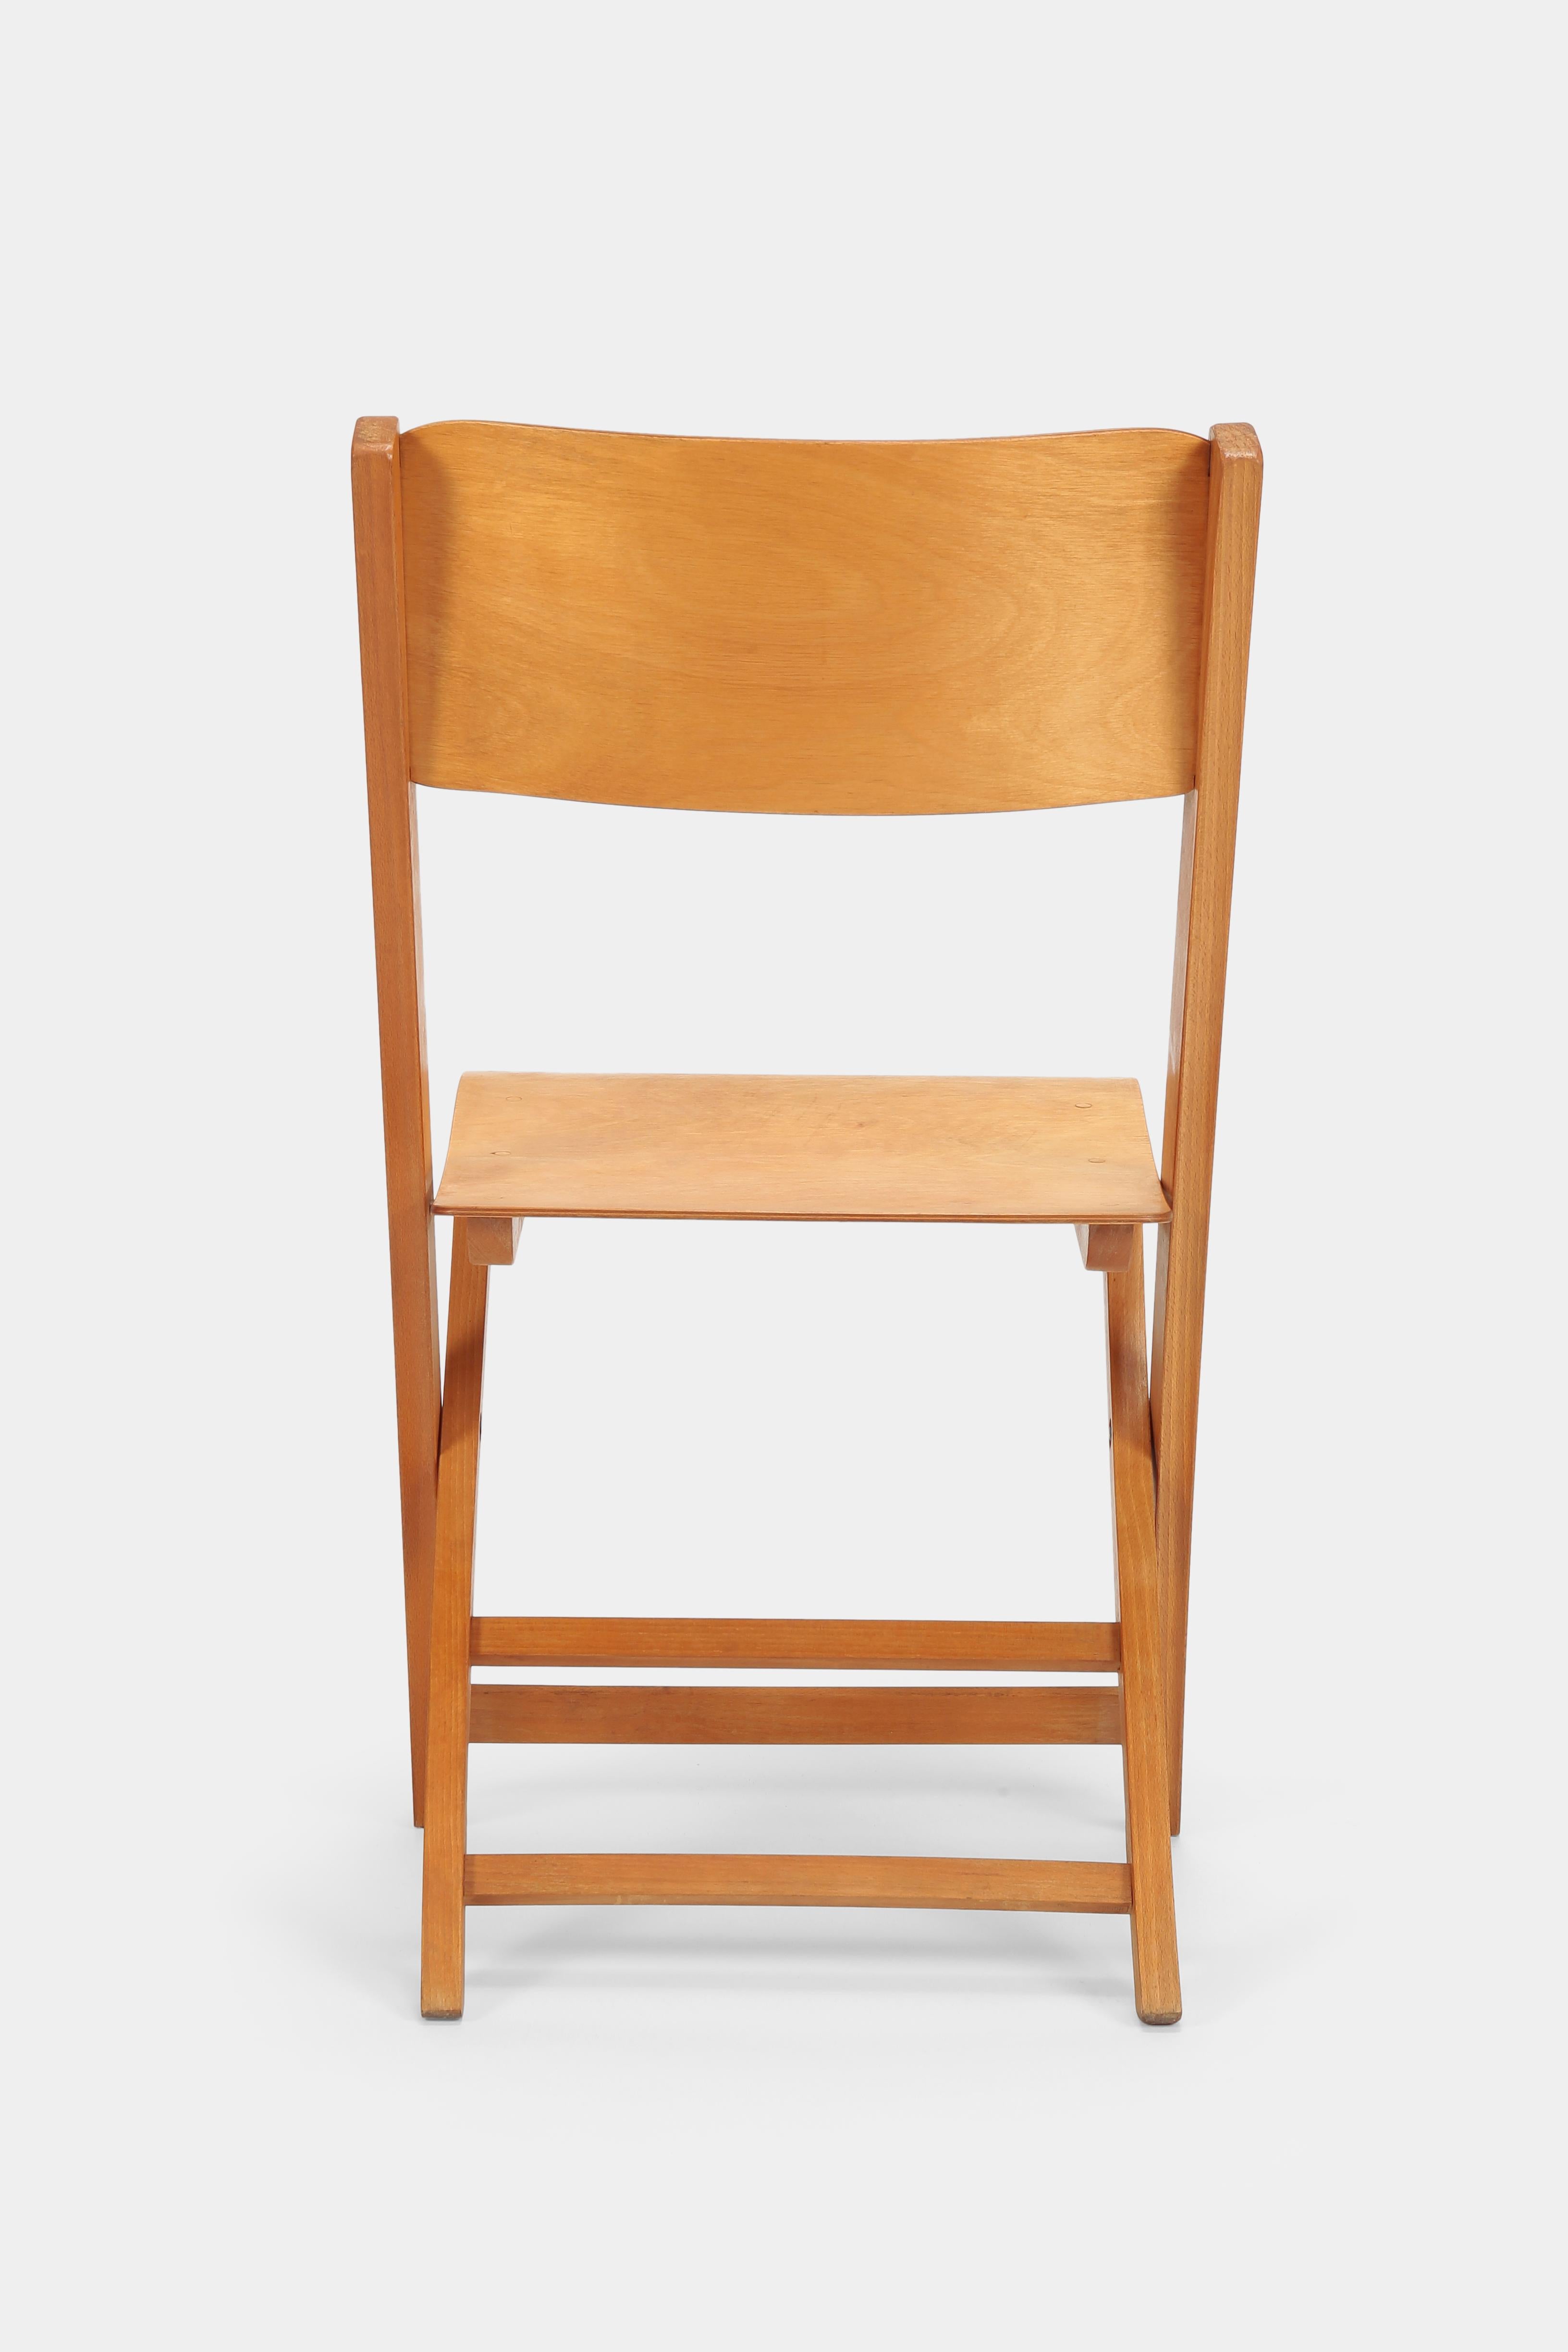 Beech Swiss Midcentury Modern Birchwood Folding Chair, Wohnbedarf 1940s, Light Brown For Sale